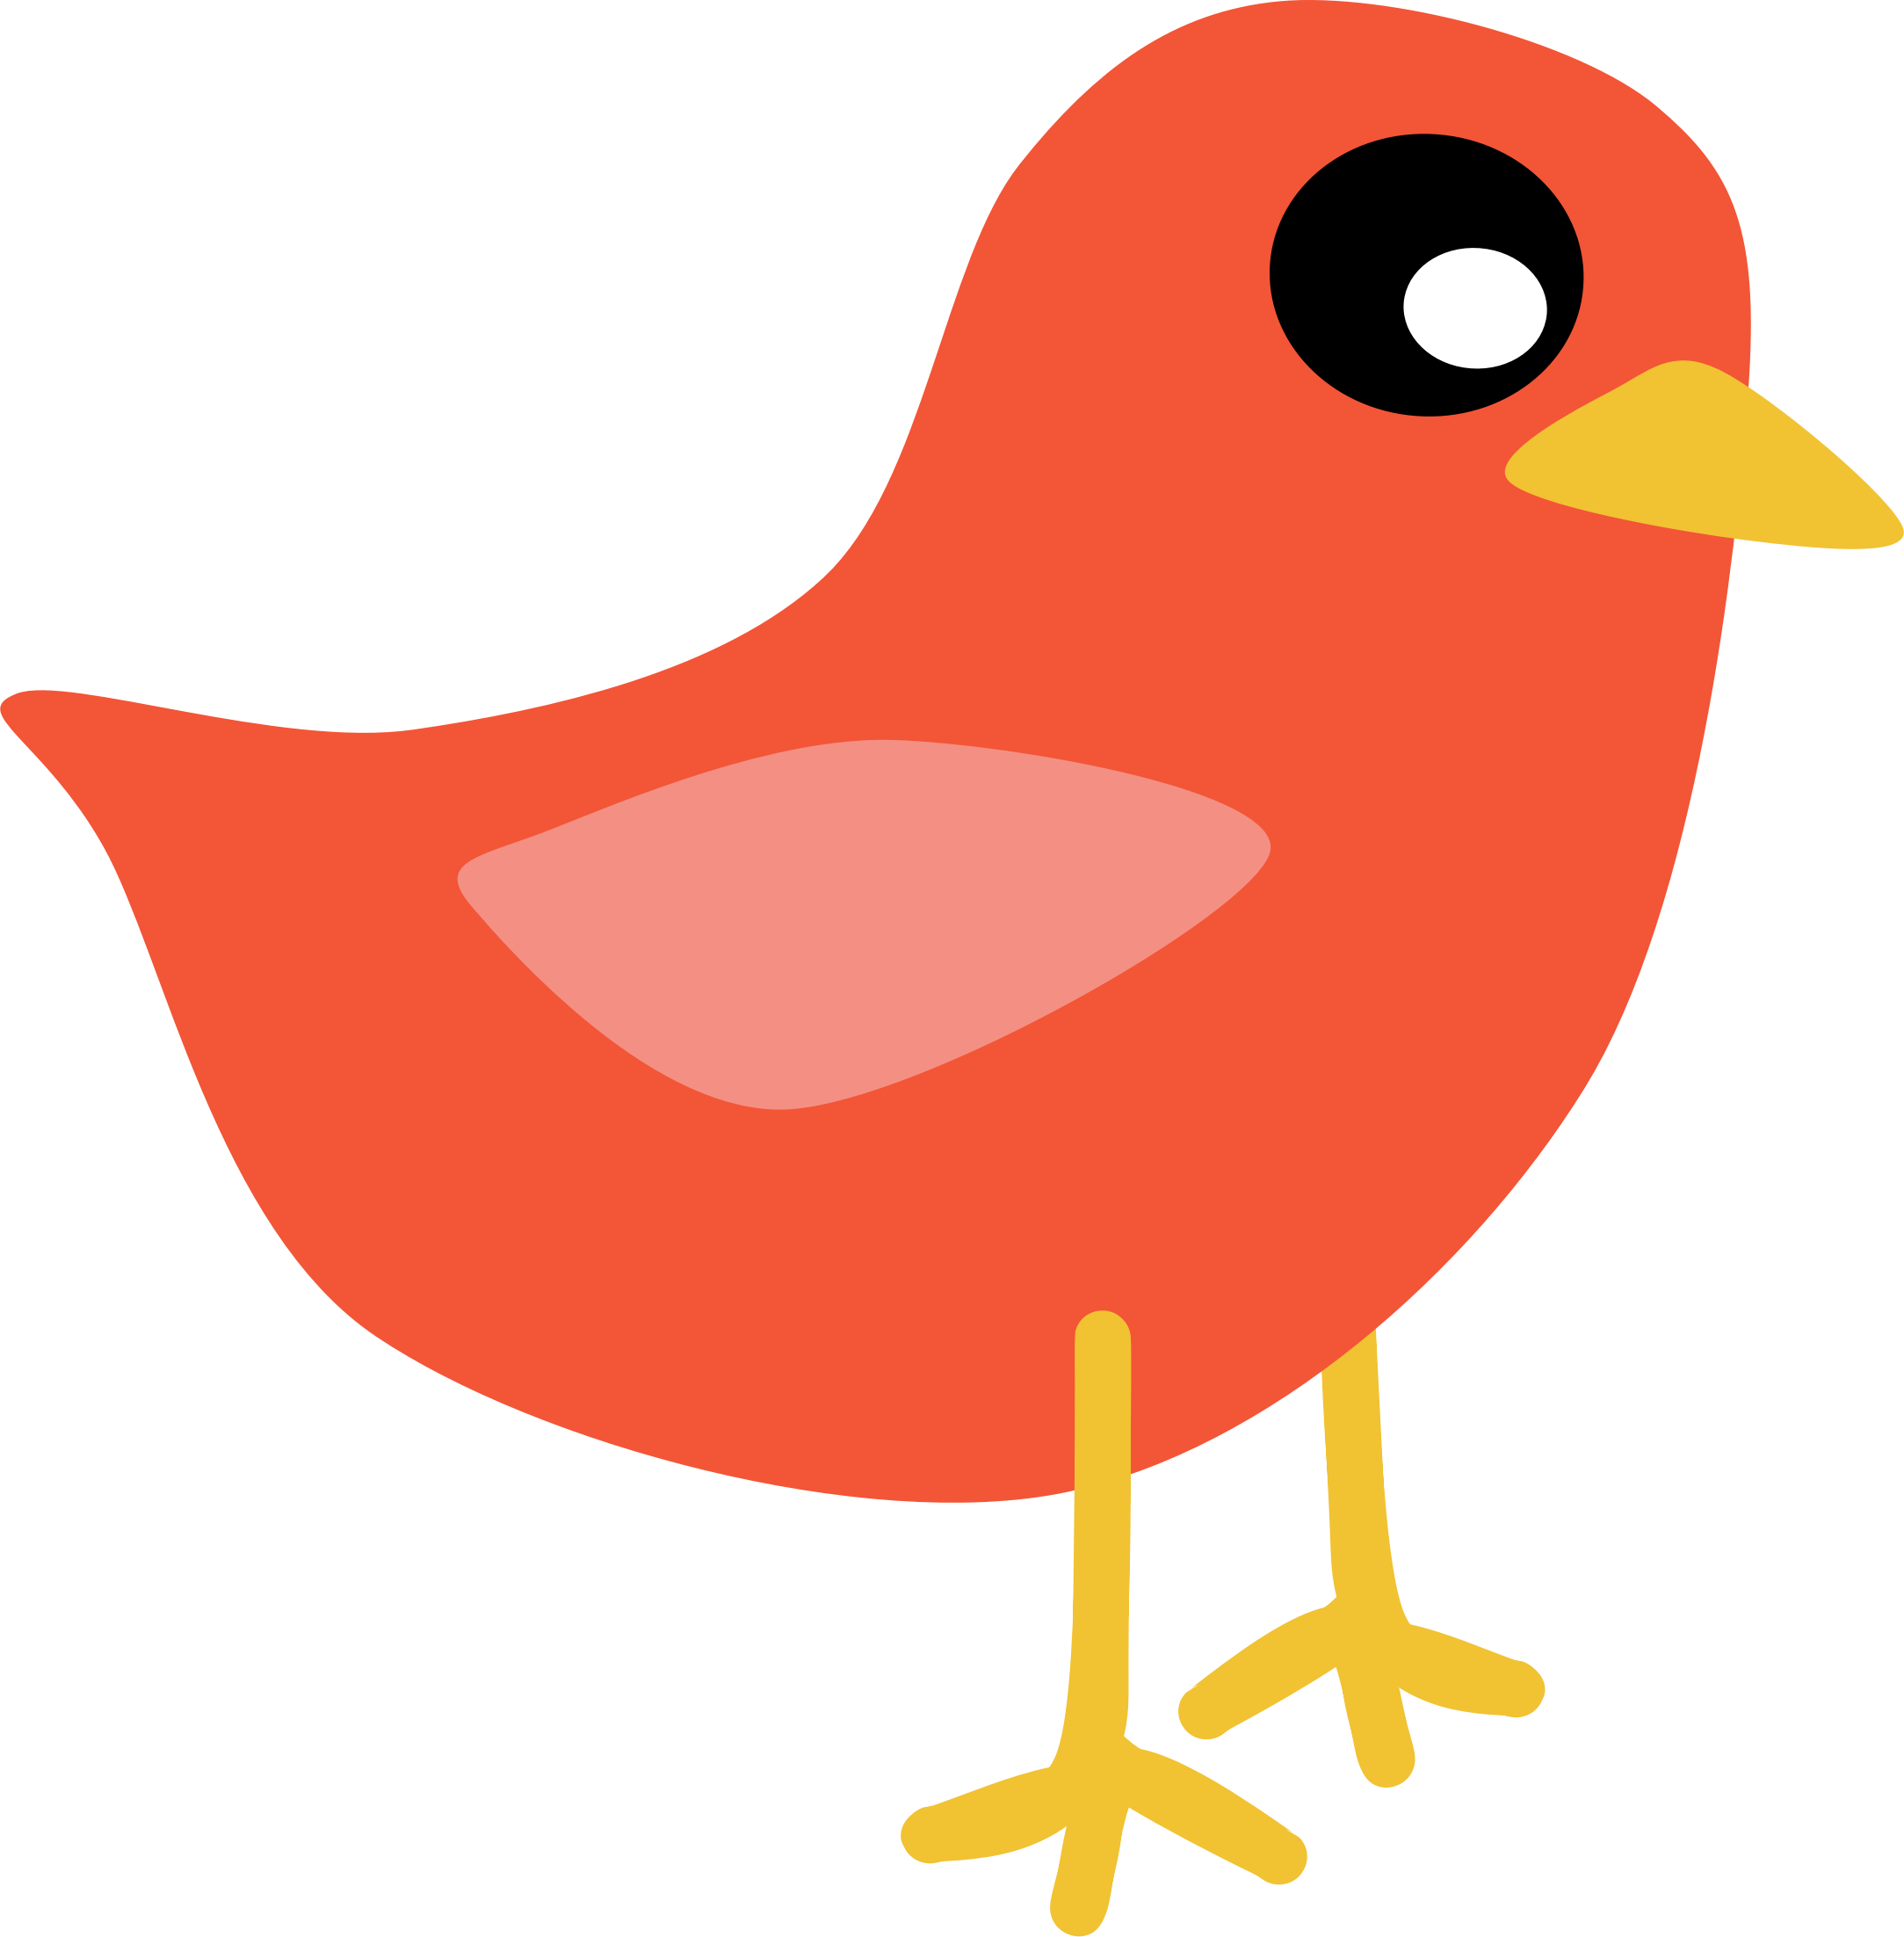 Cute red bird clip art - Clipartix